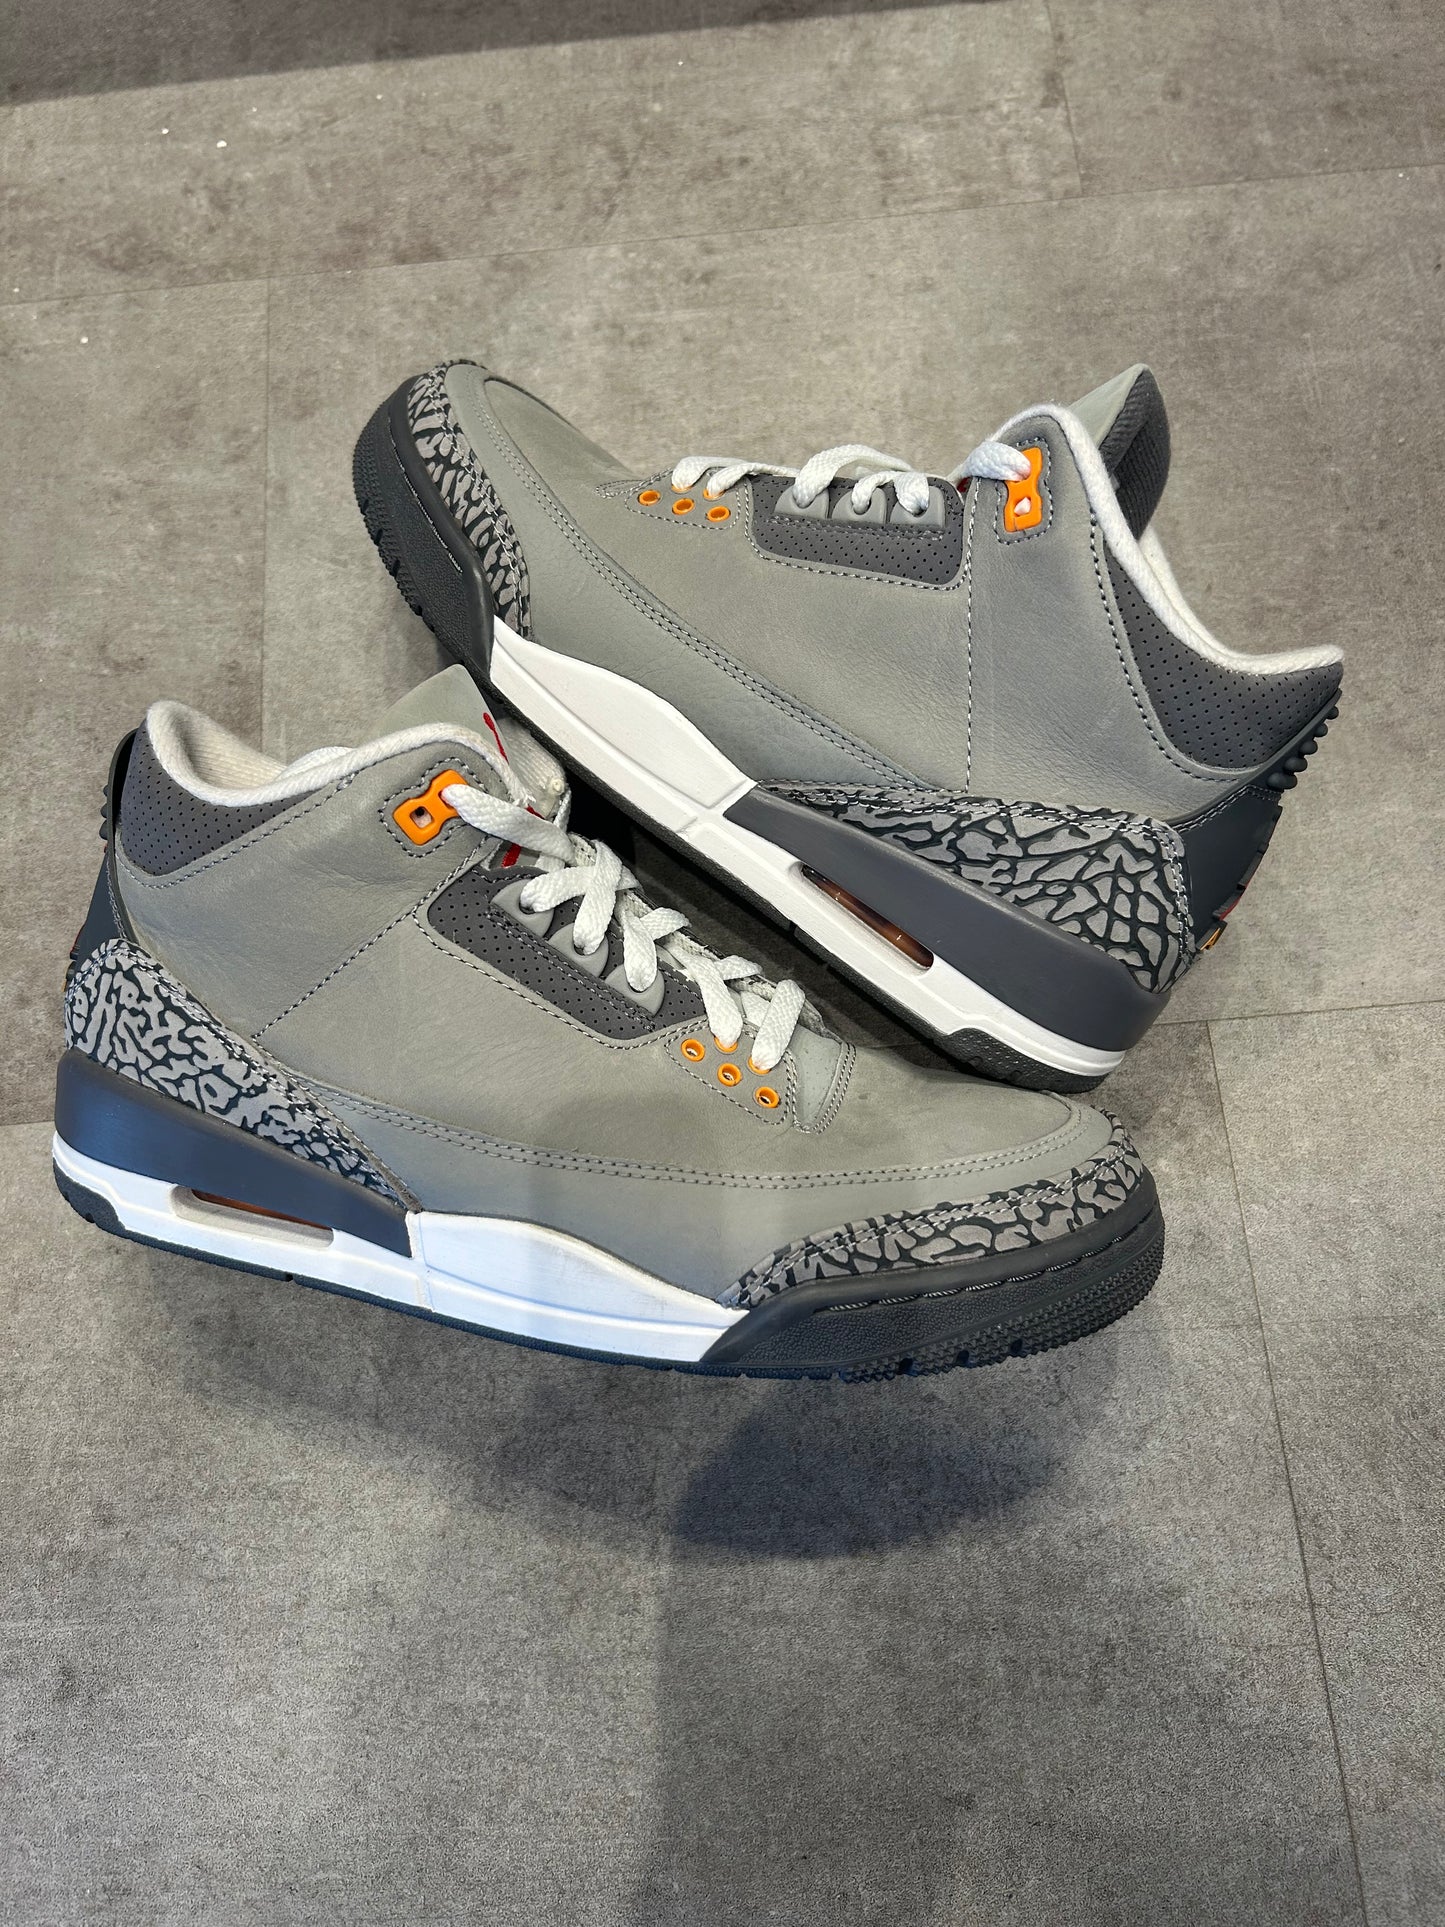 Jordan 3 Retro Cool Grey (Preowned Size 8)